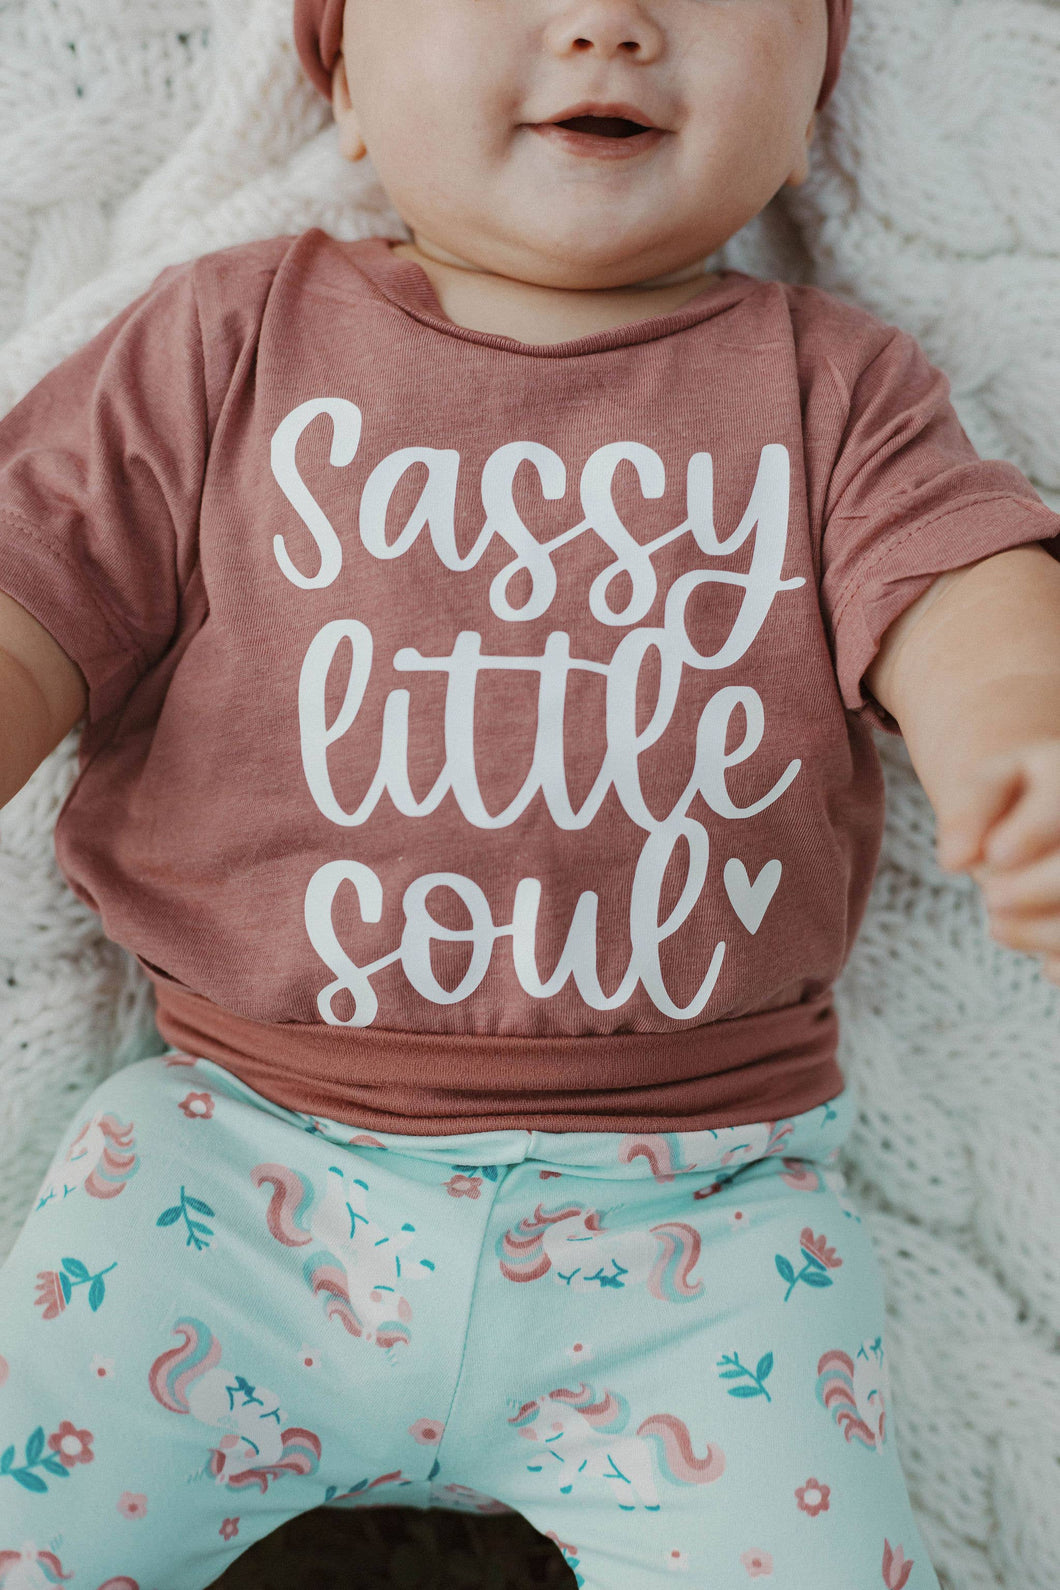 Jena Bug Baby - Sassy Little Soul - Infant/Toddler Tee